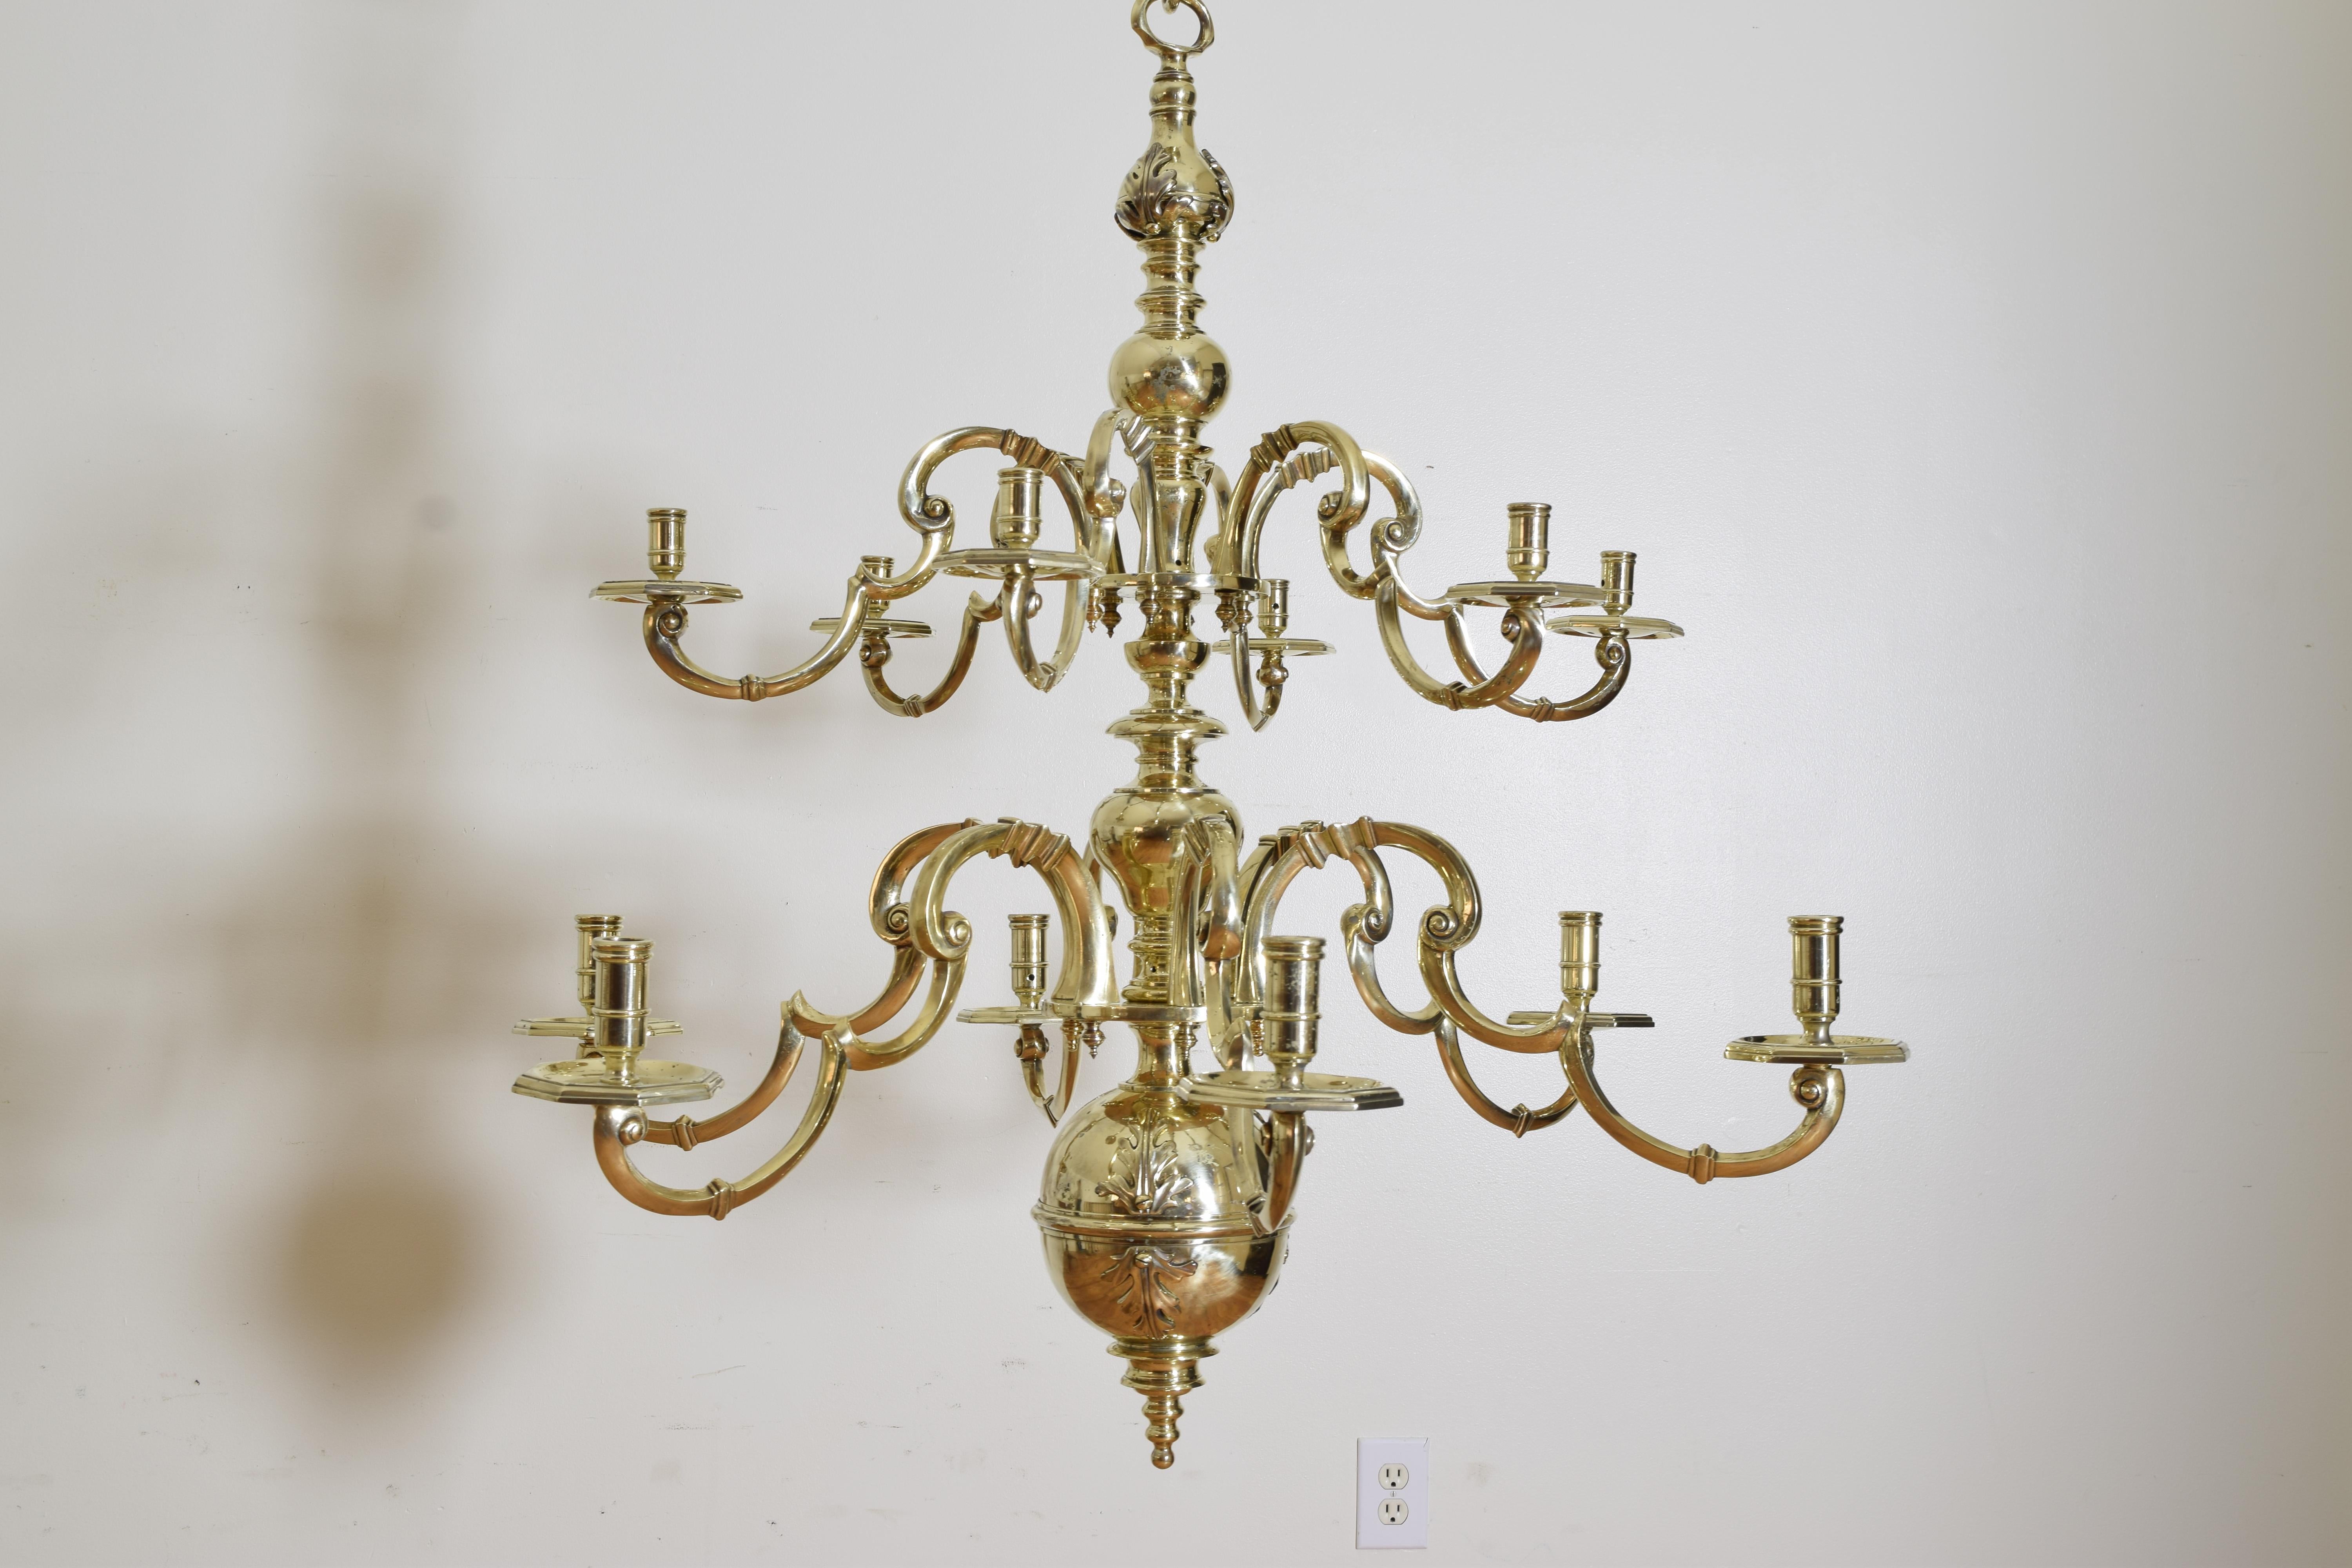 Exceptional Dutch Baroque Style 2-Tier 12 Light Brass Chandelier, 3rdq 19th cen. For Sale 2